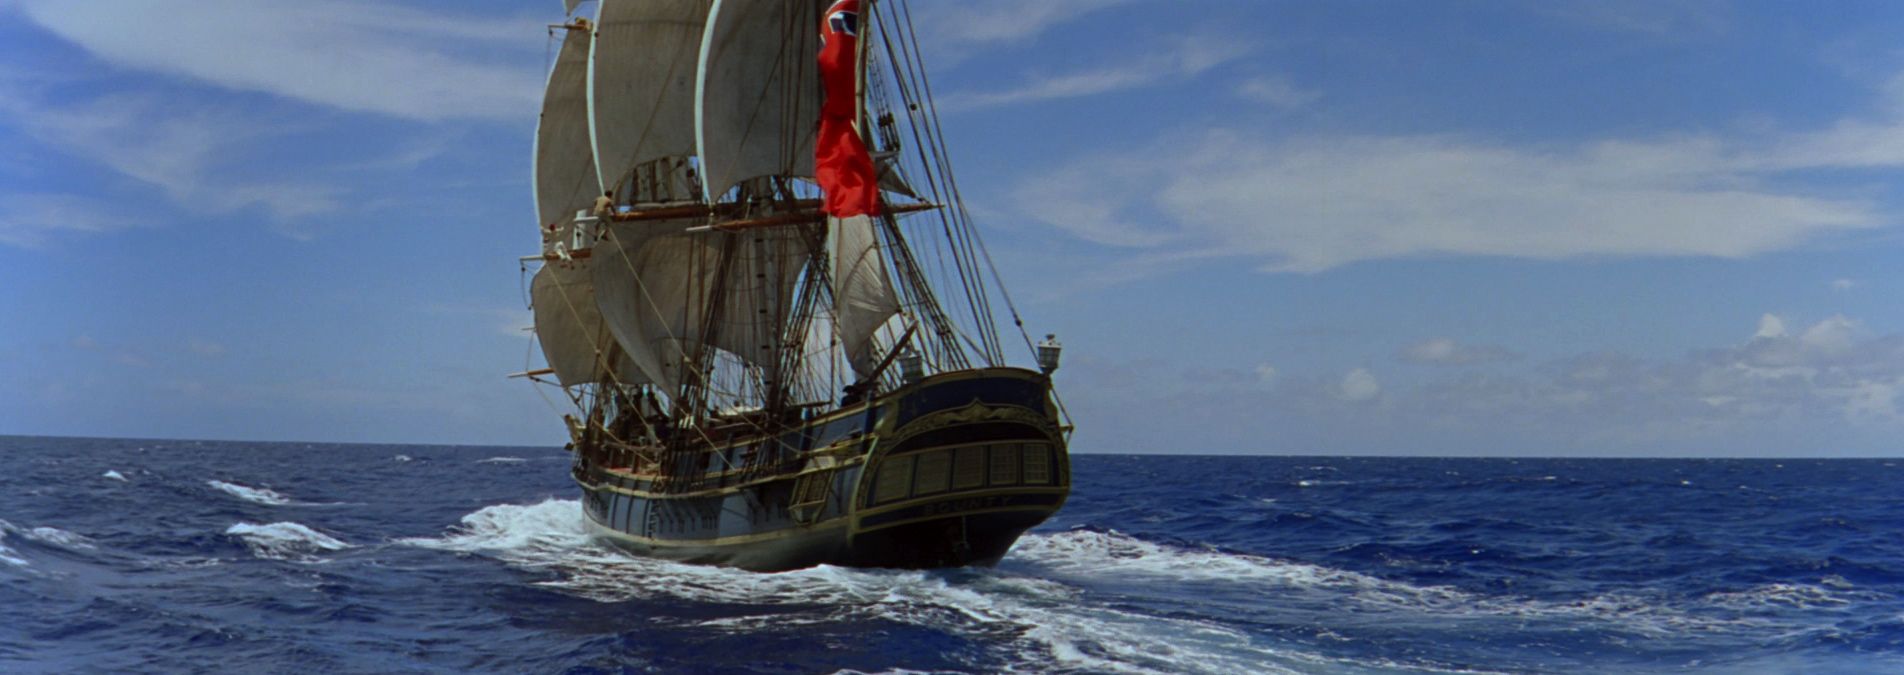 film mutiny on the bounty